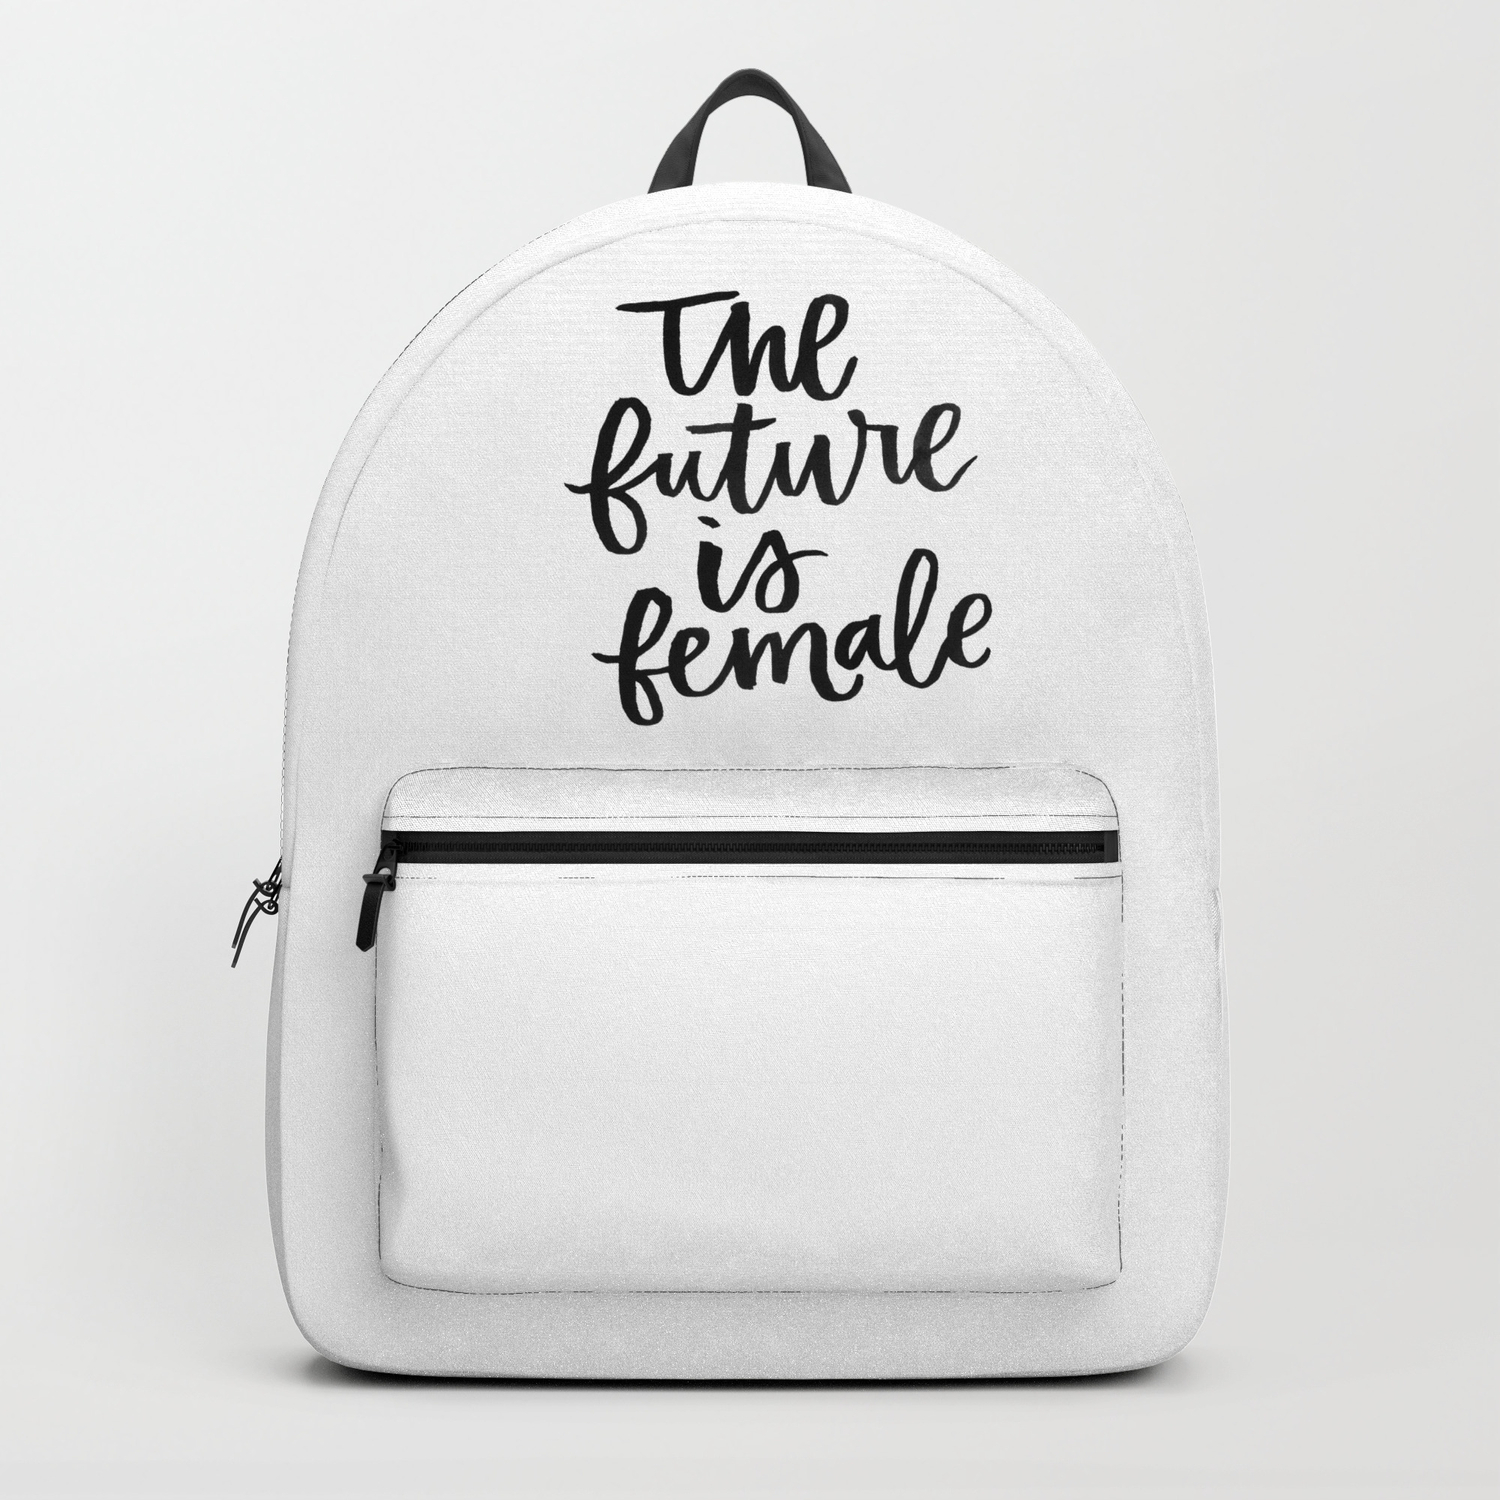 The future is female kit bag backpack ruck sack femenist school 